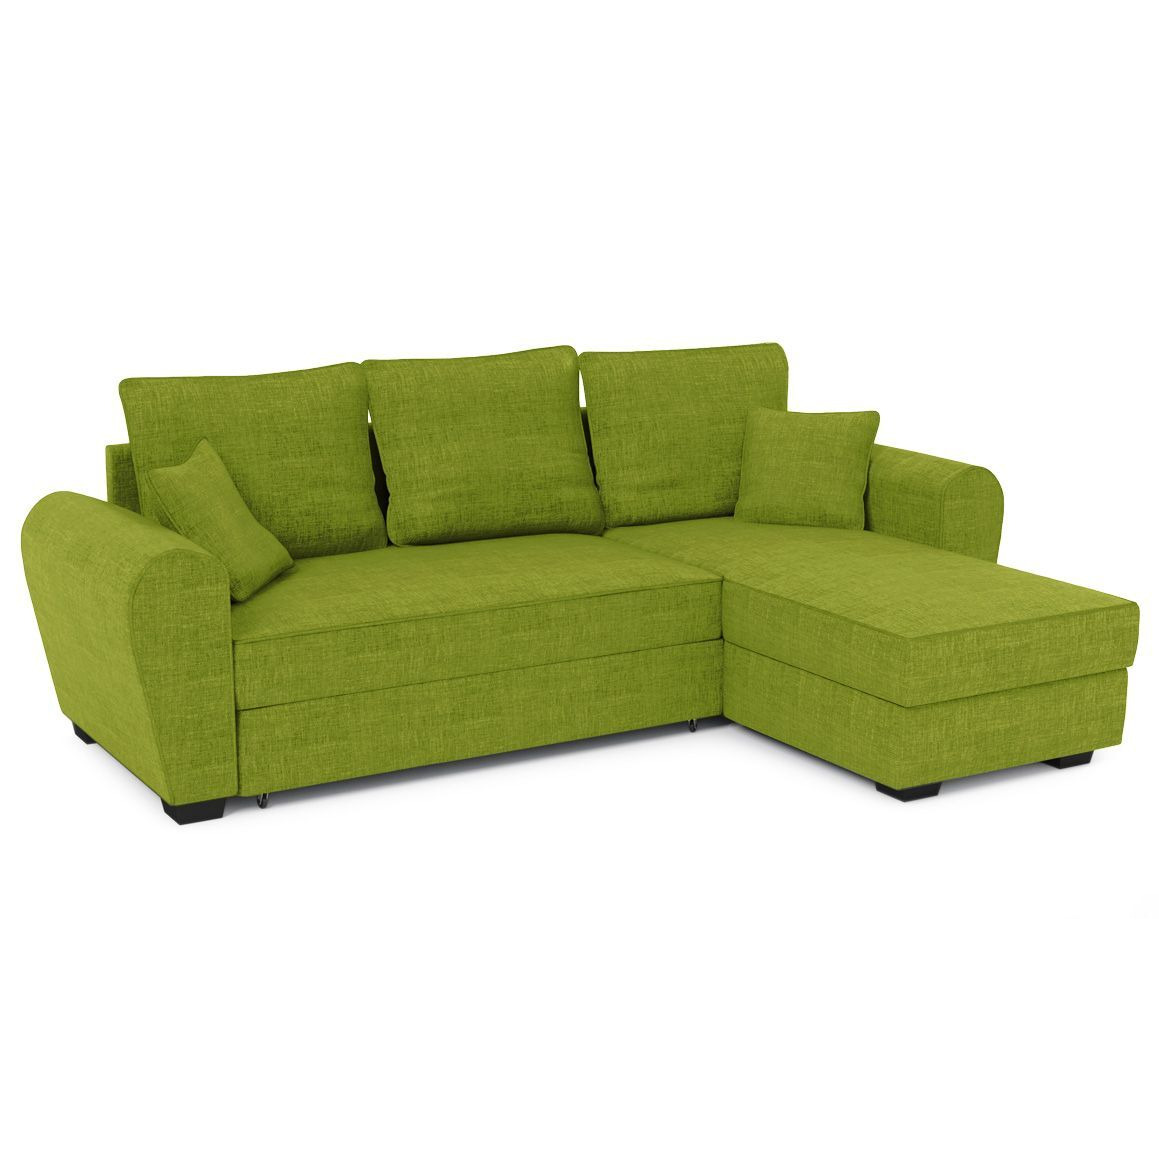 Nicea Corner Sofa Bed With Storage, lime - image 1